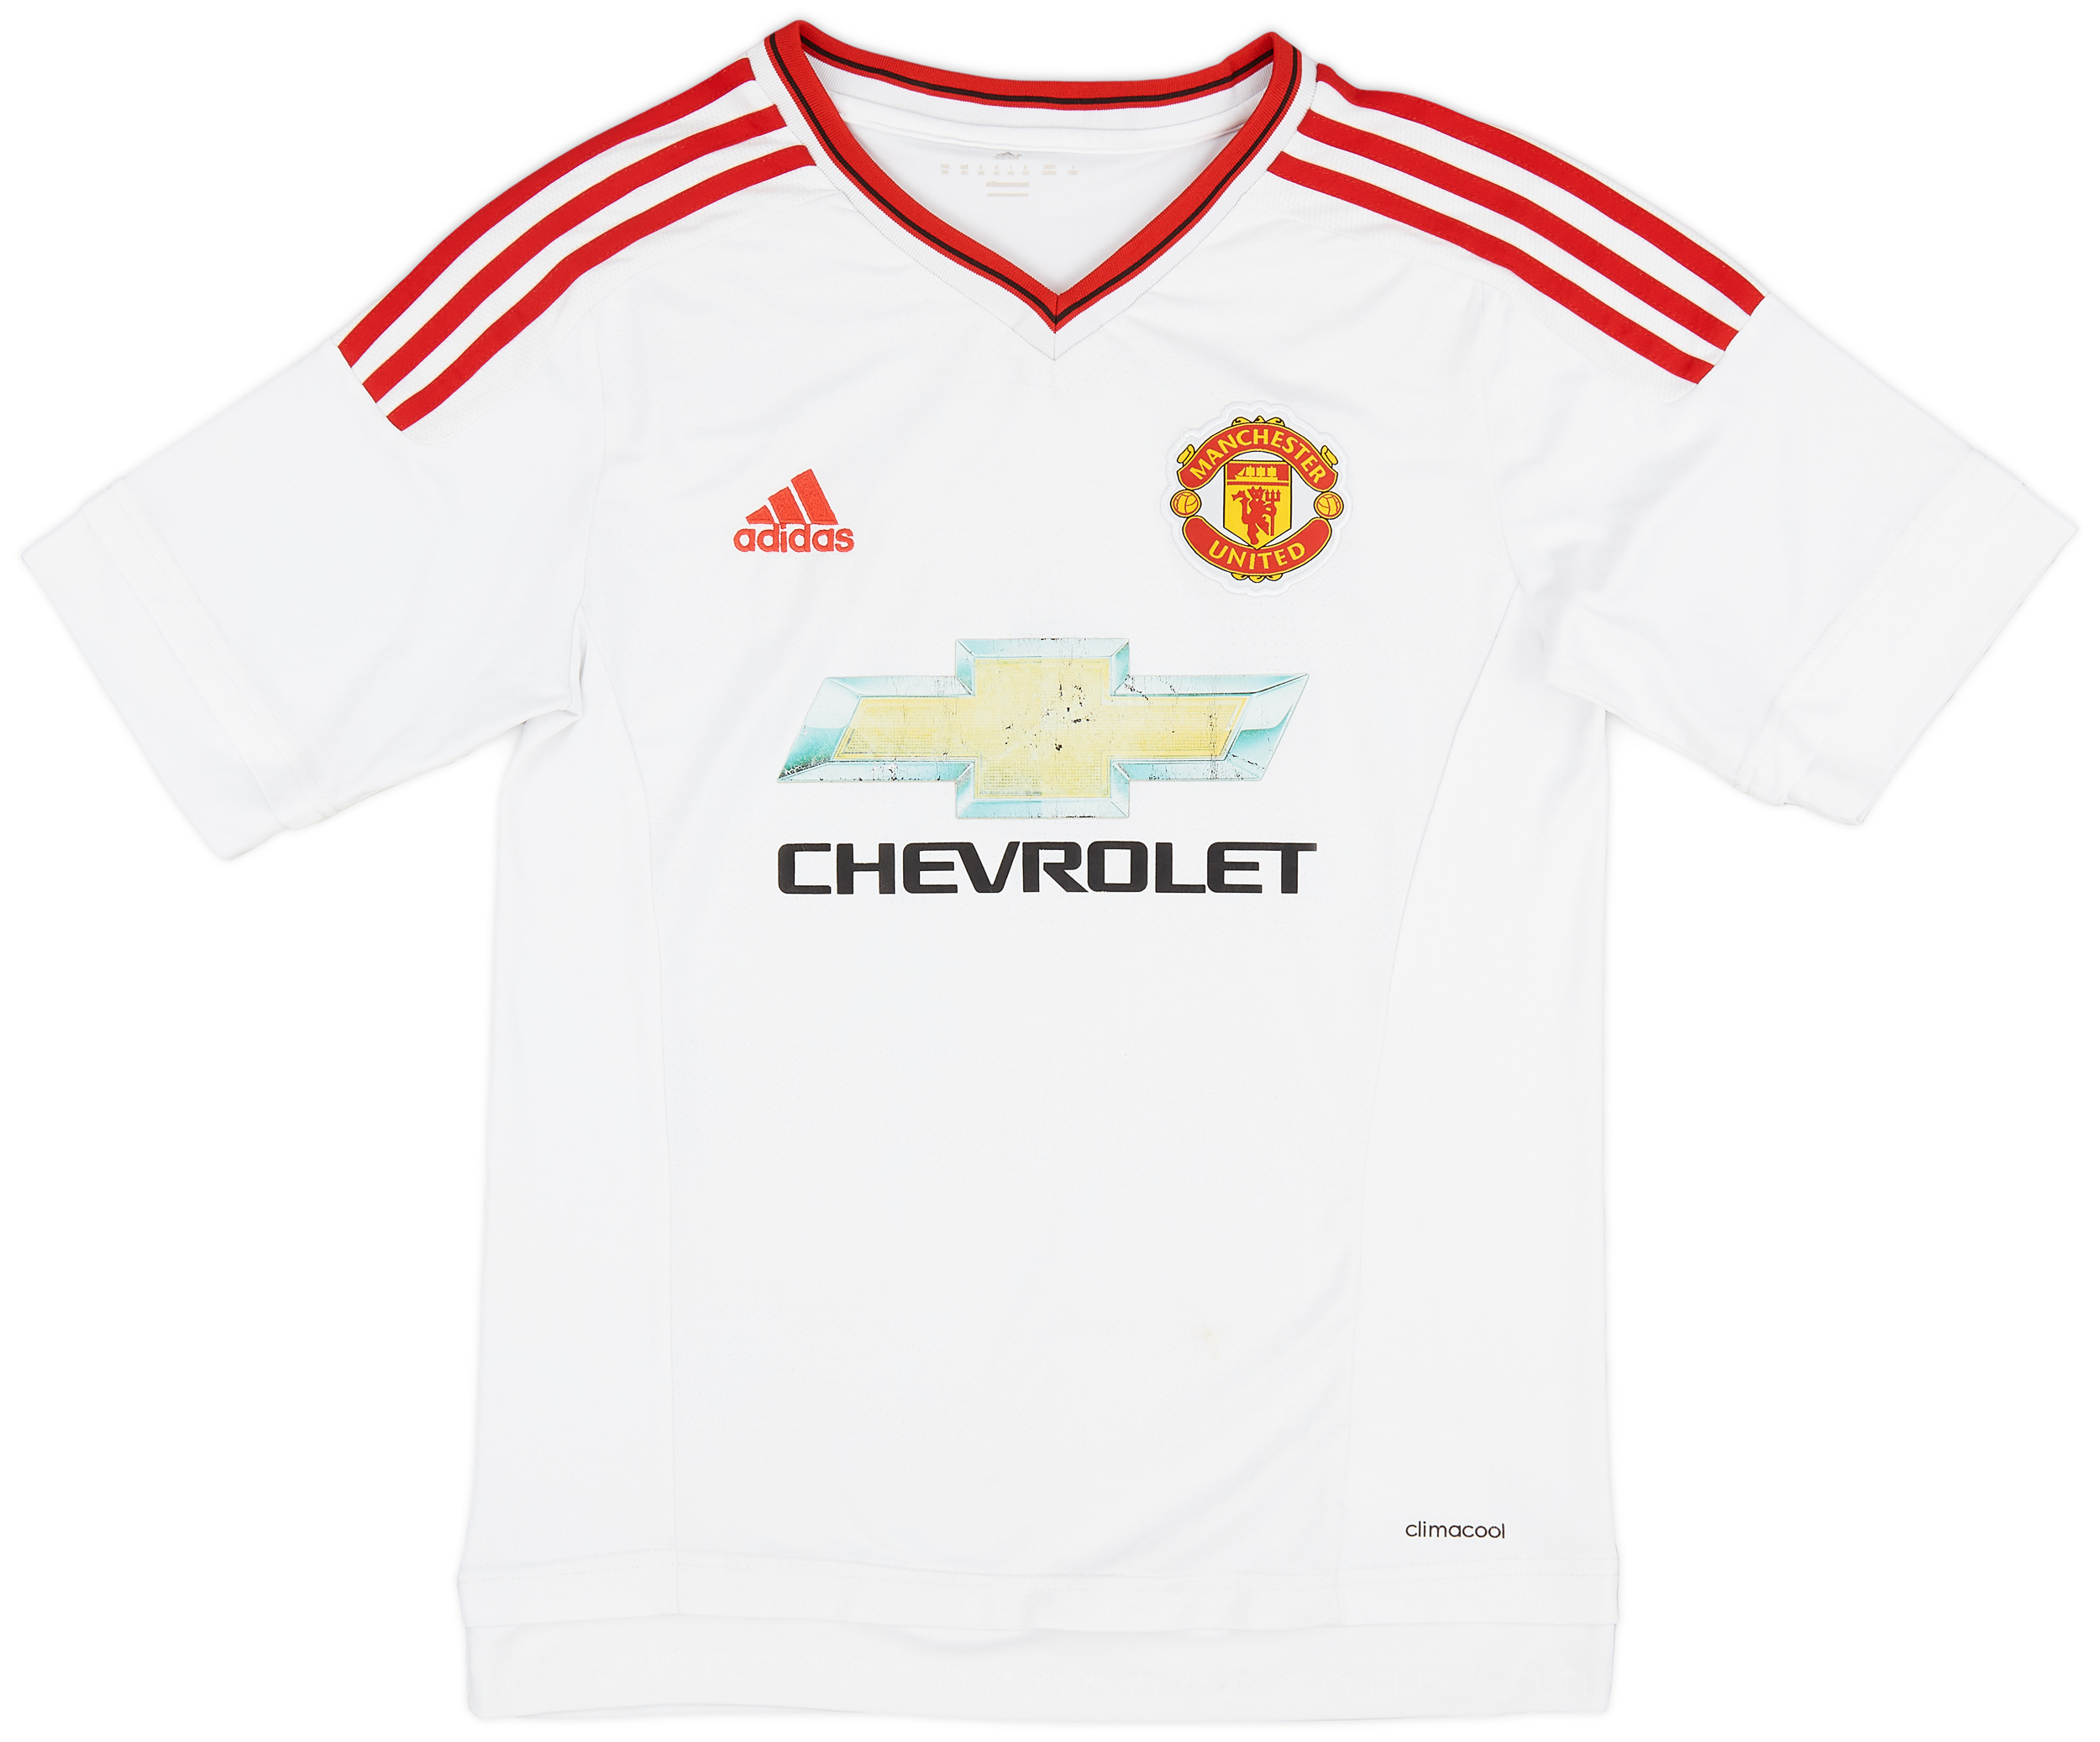 2015-16 Manchester United Away Shirt - 5/10 - ()